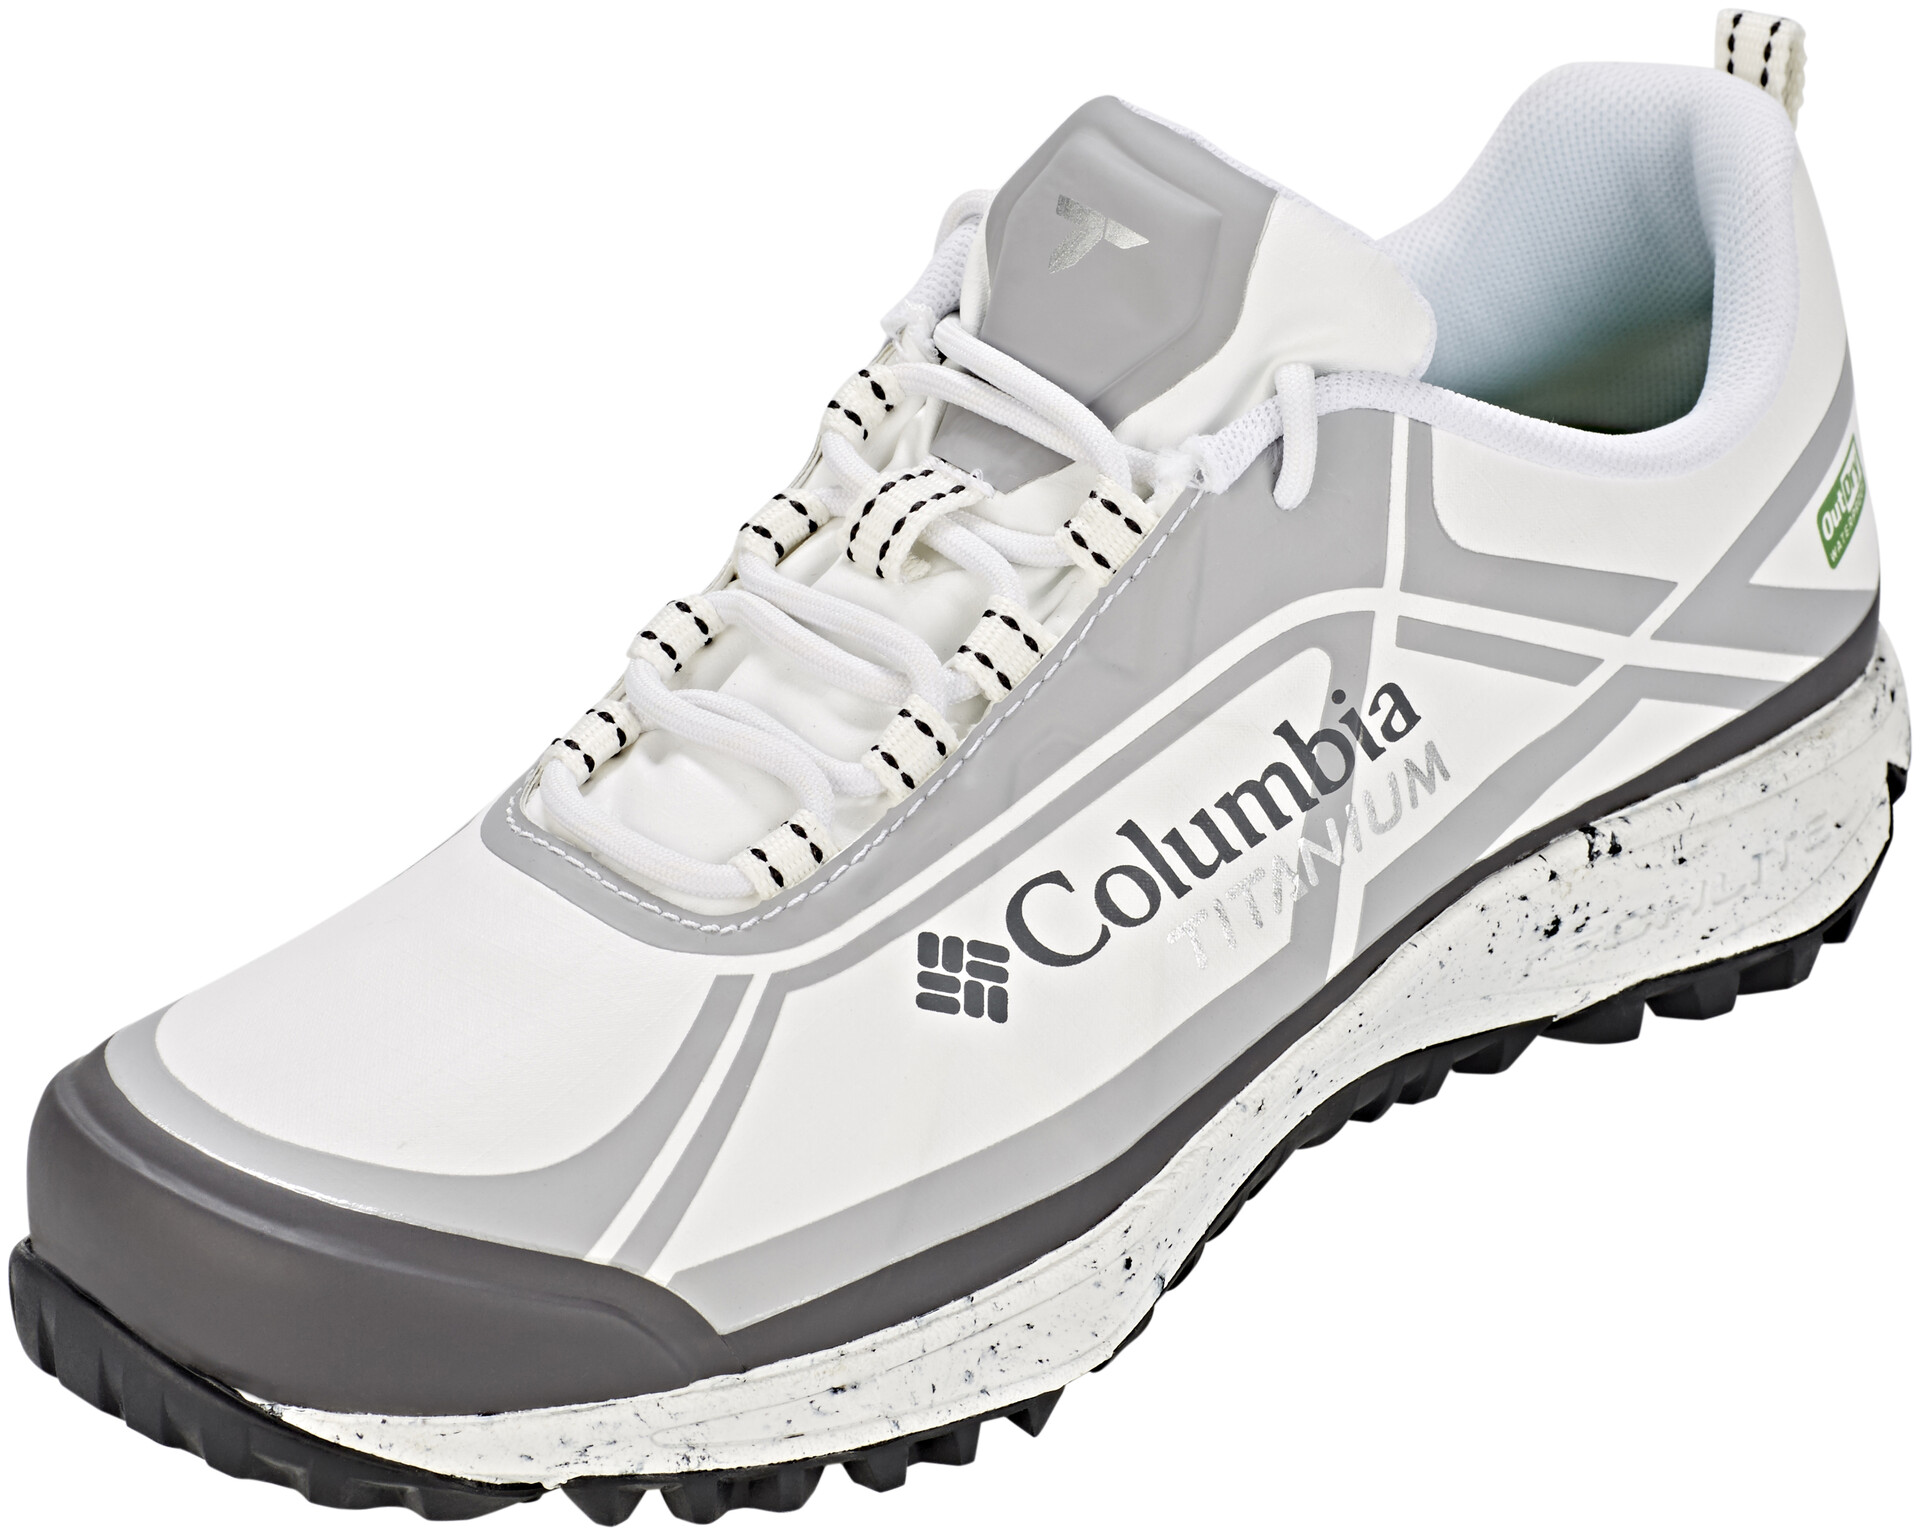 columbia conspiracy iii outdry waterproof shoe